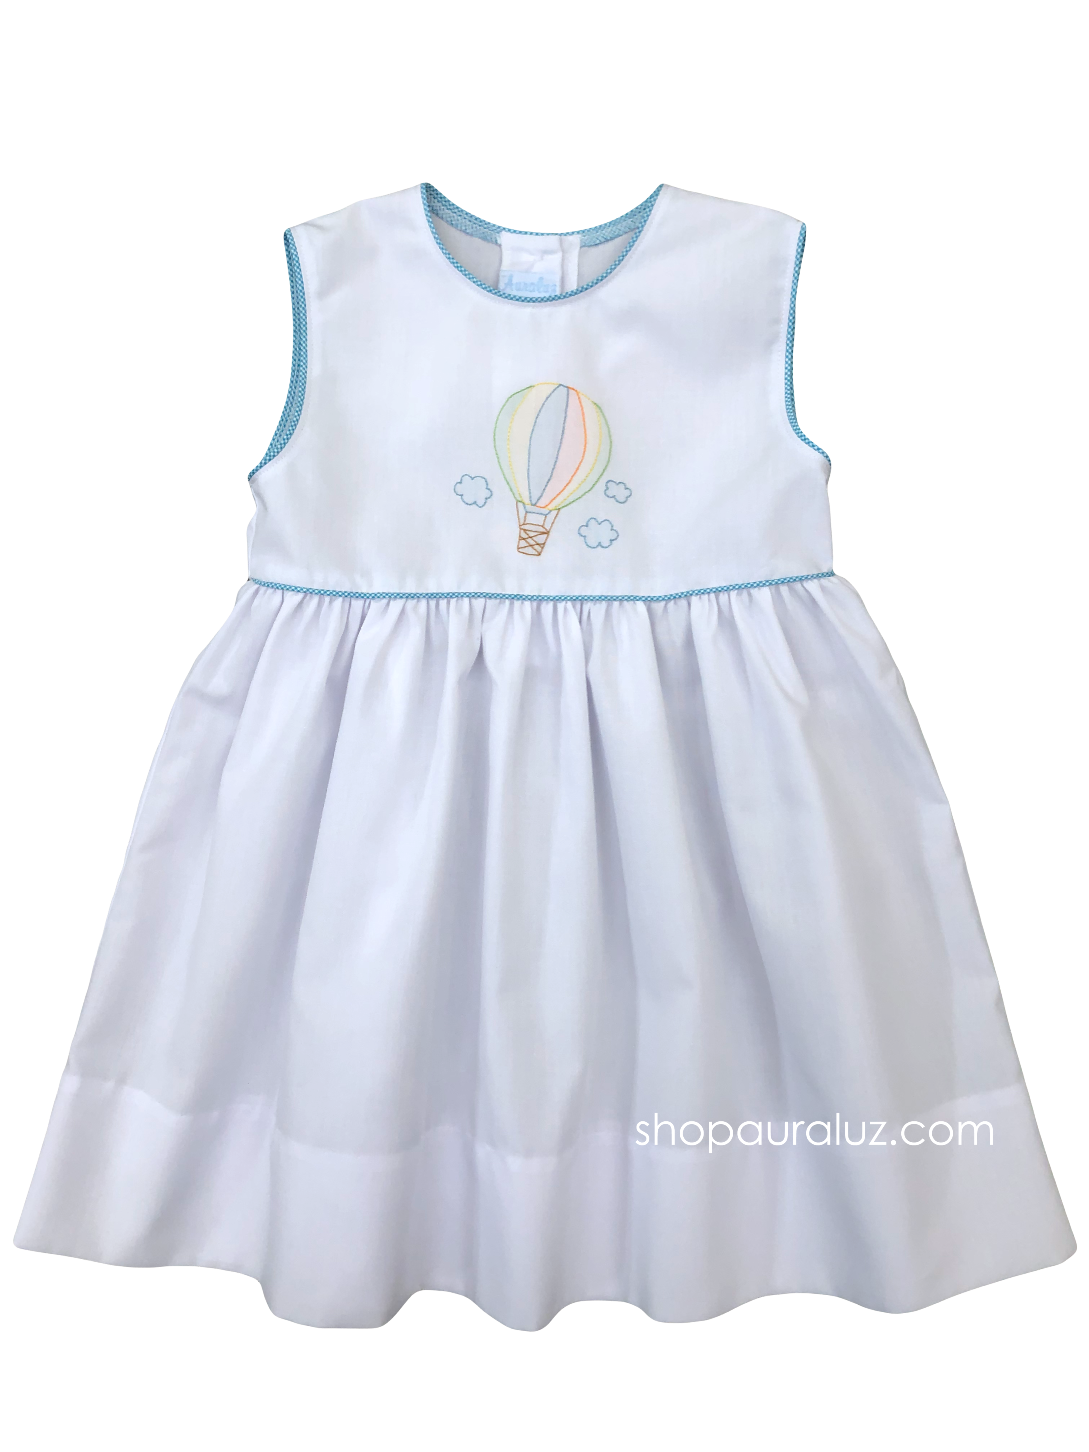 Auraluz Sleeveless Dress...White with aqua check trim and embroidered hot air balloon